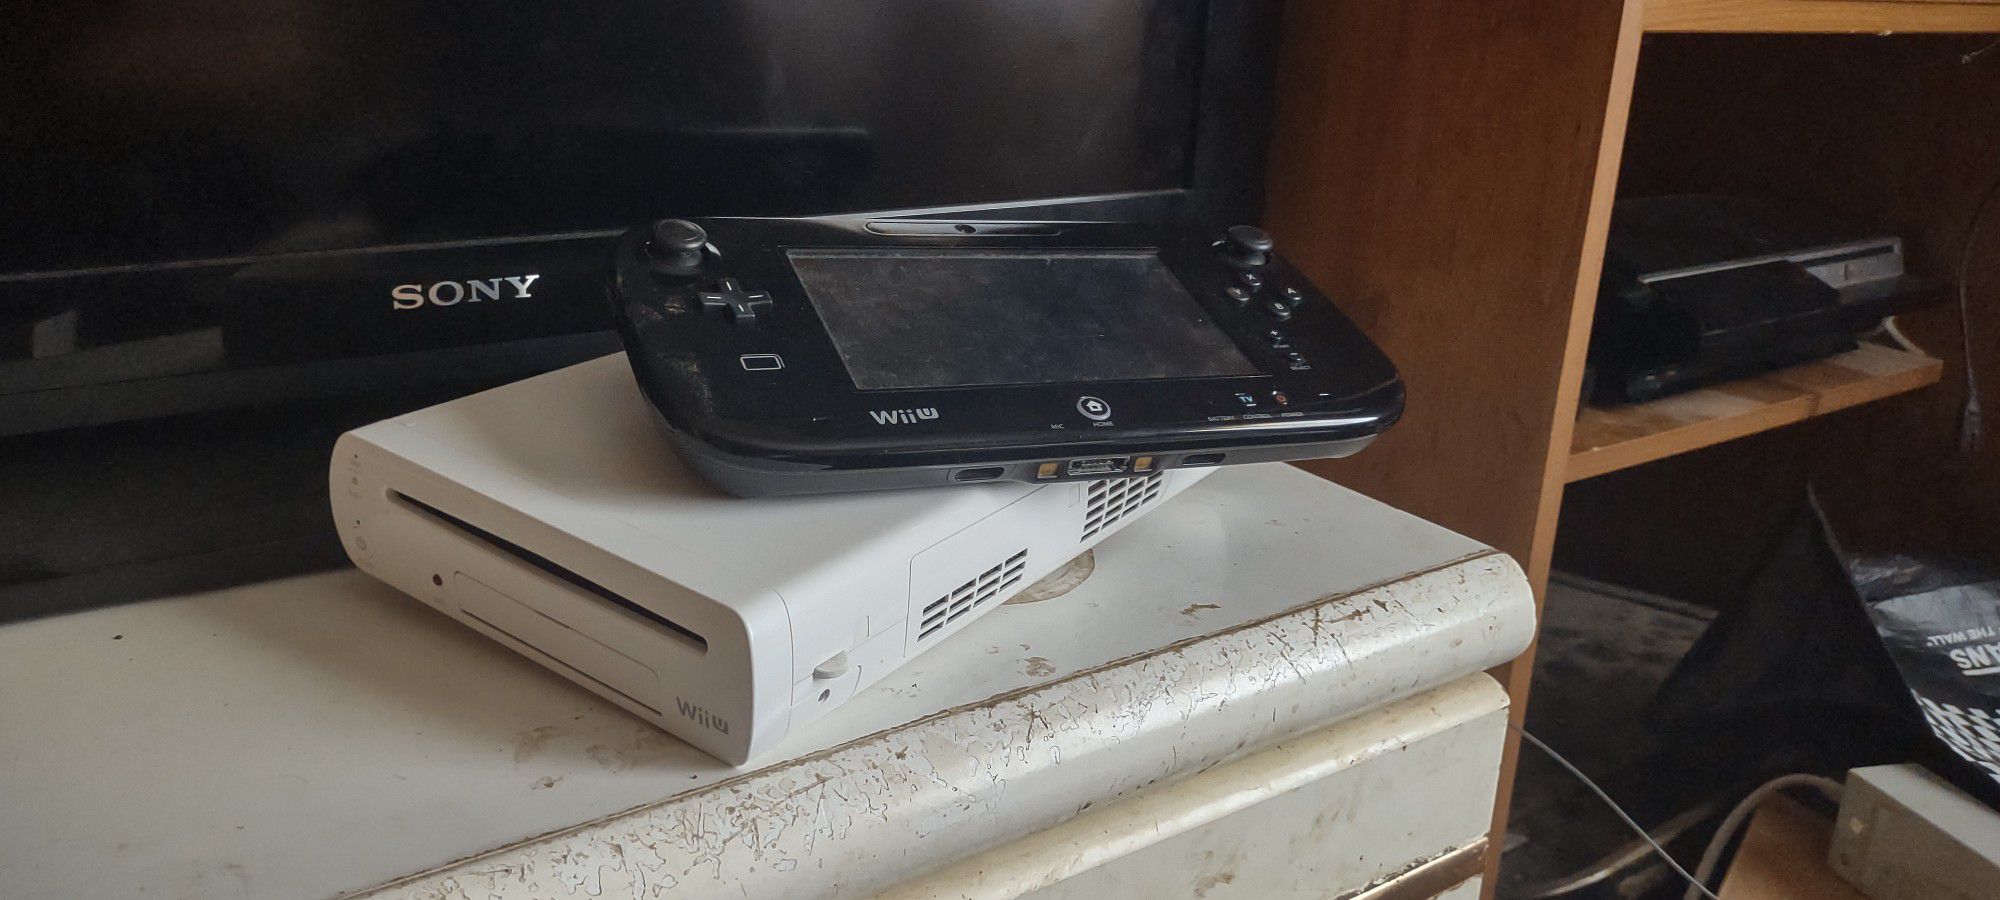 Modded White Wii U with GamePad.